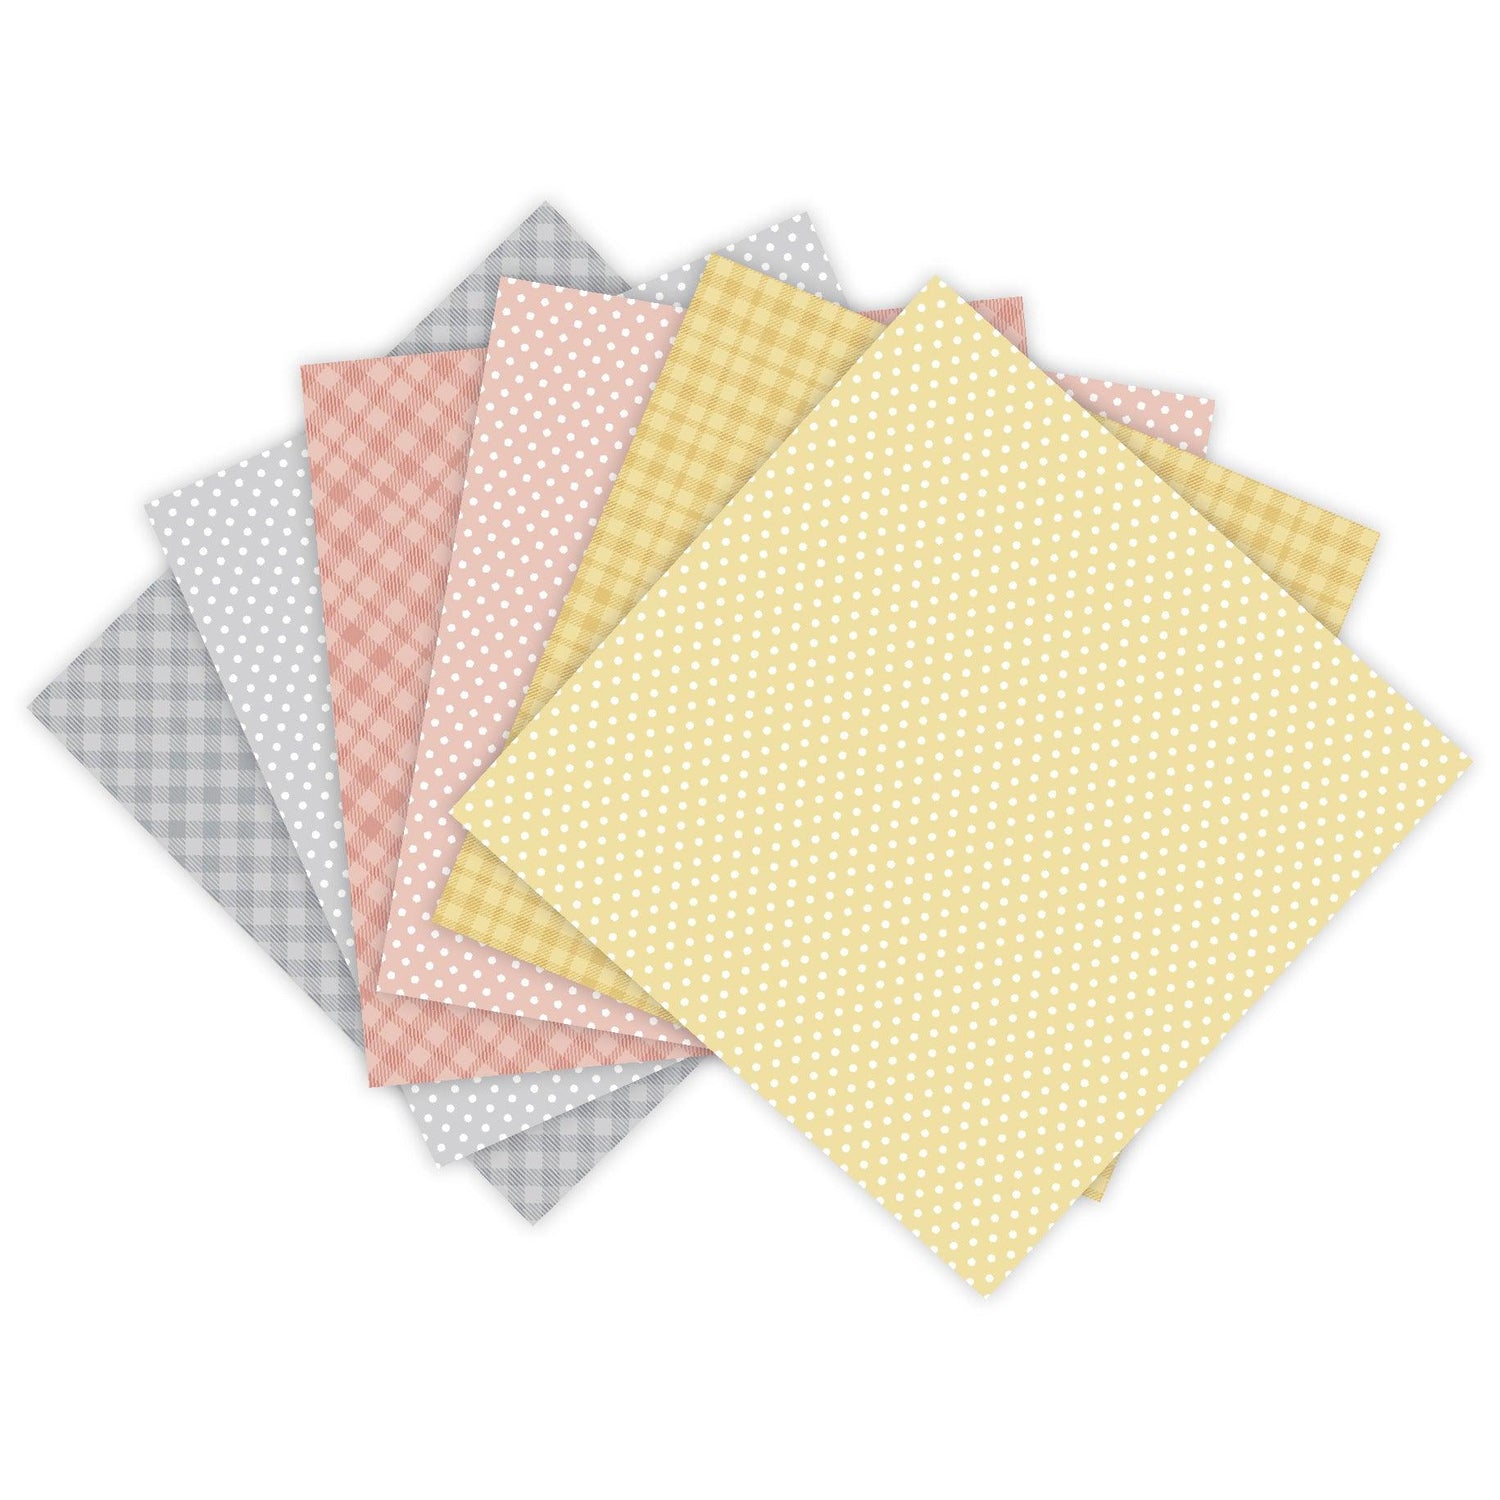 Decorative Paper - Decorative Paper - Spring Color Background Paper -